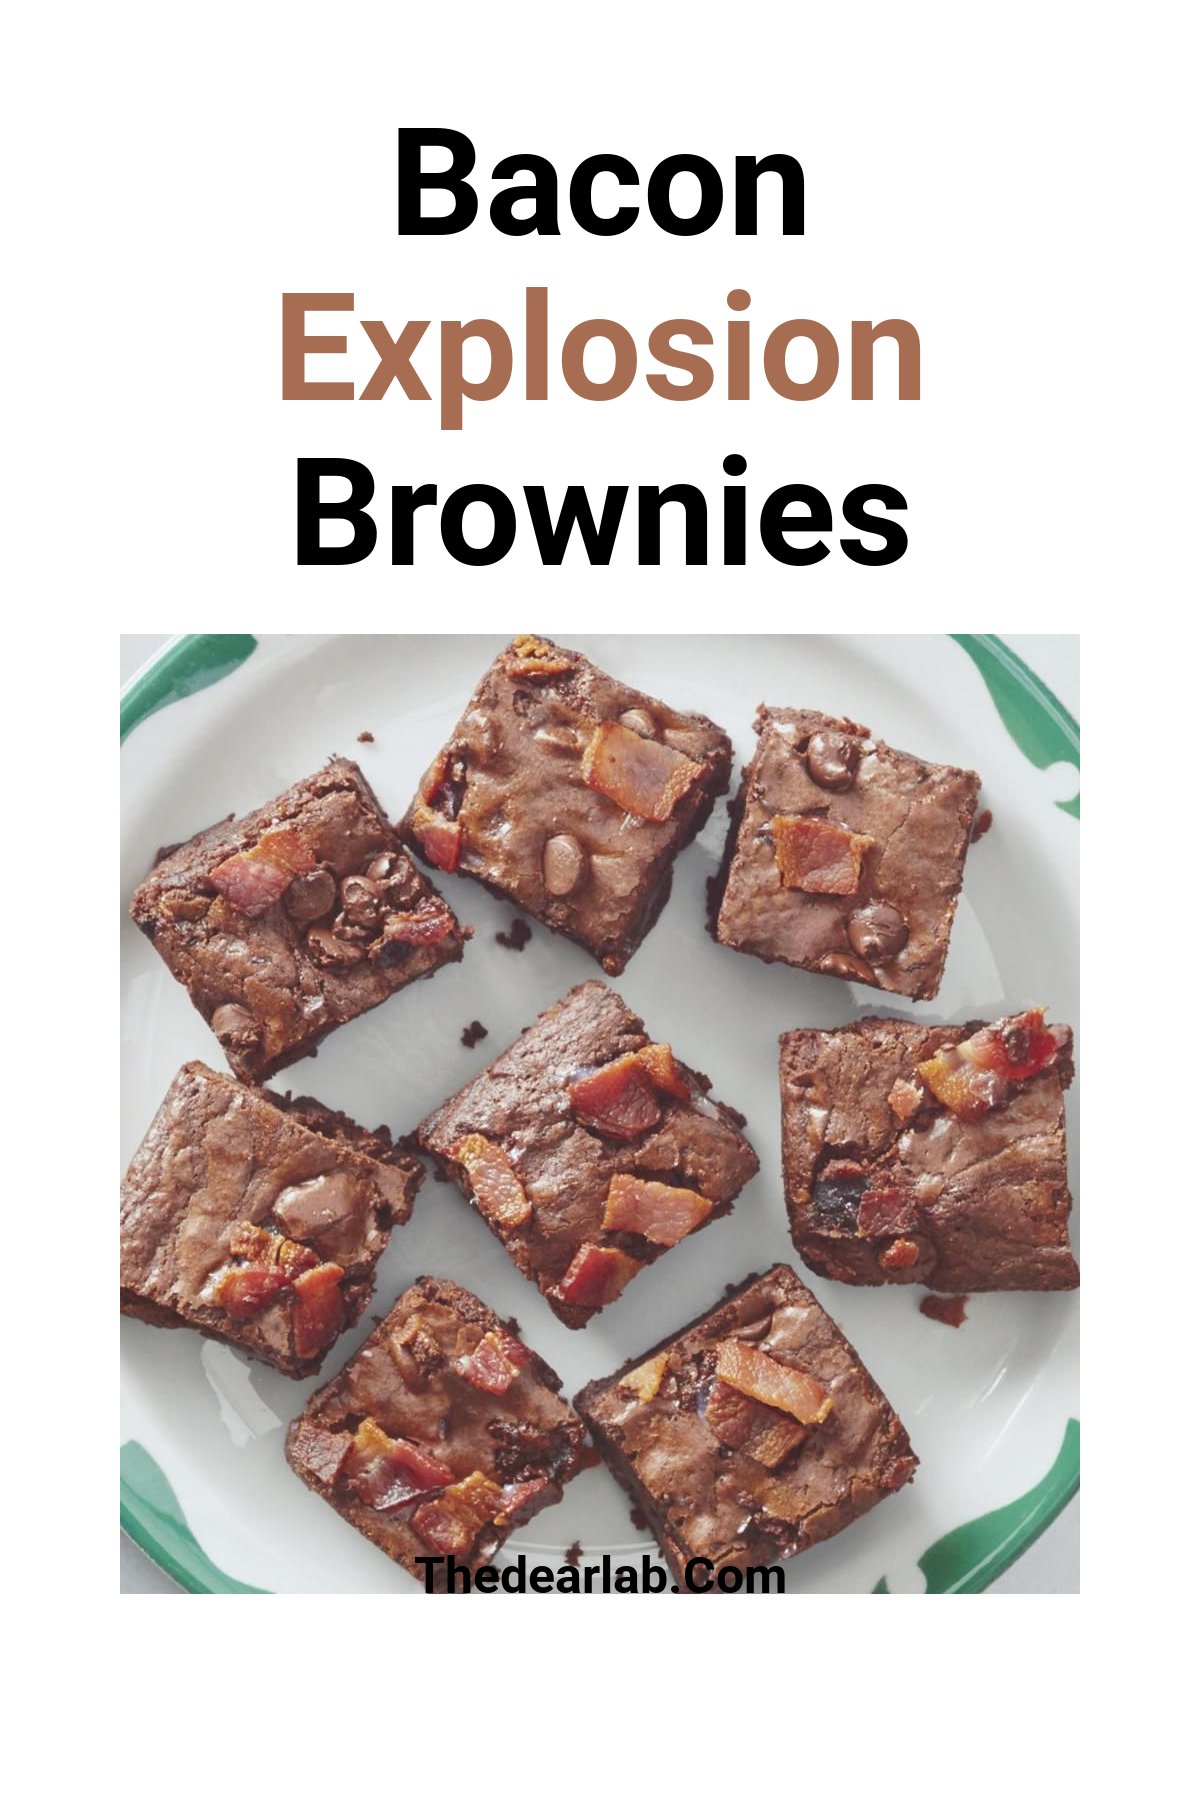 Bacon Brownies